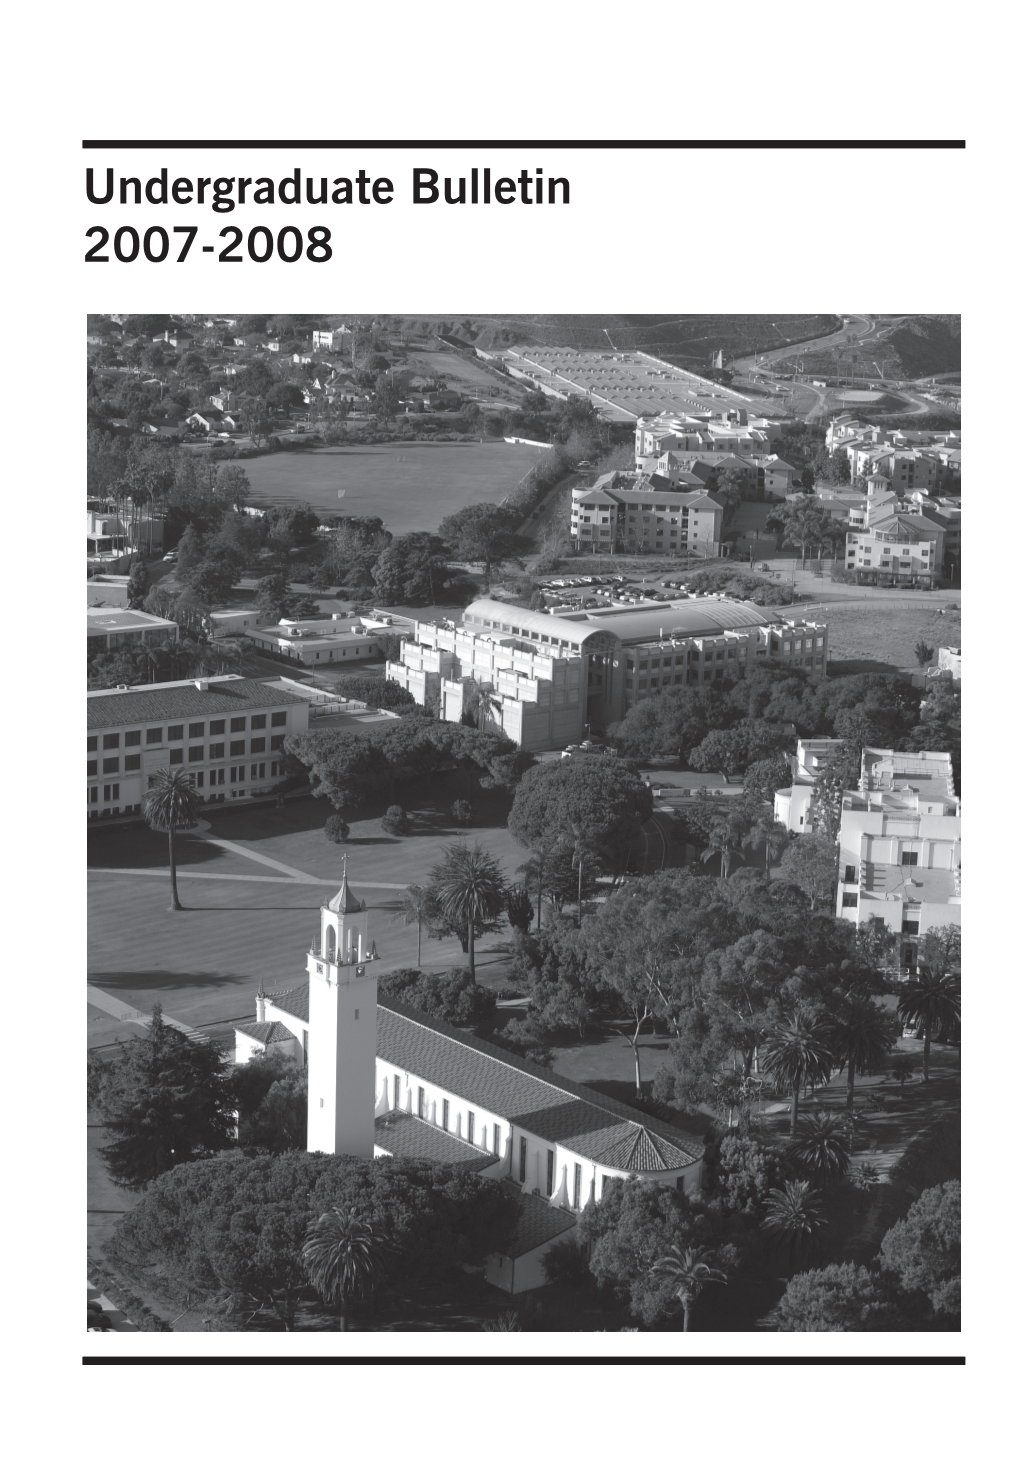 2007-08 Undergraduate Bulletin